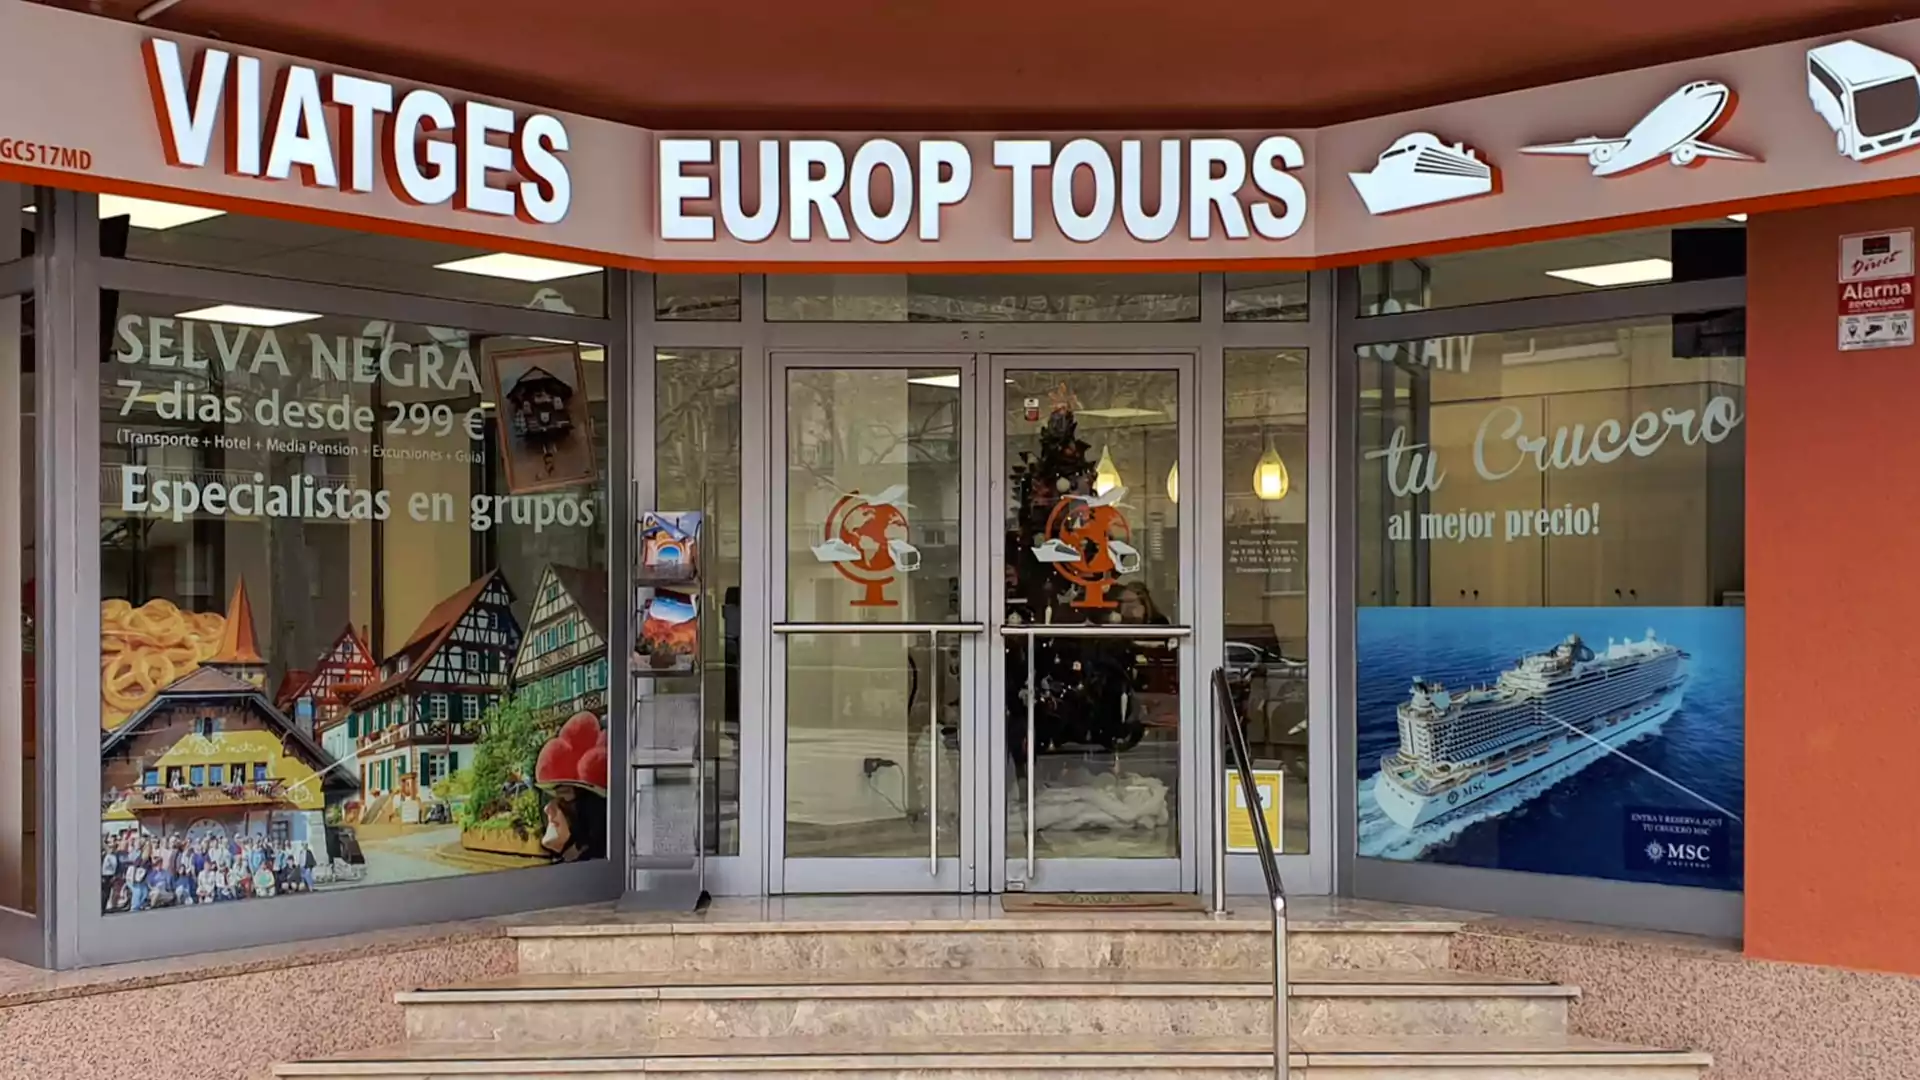 Viatges Europ Tours